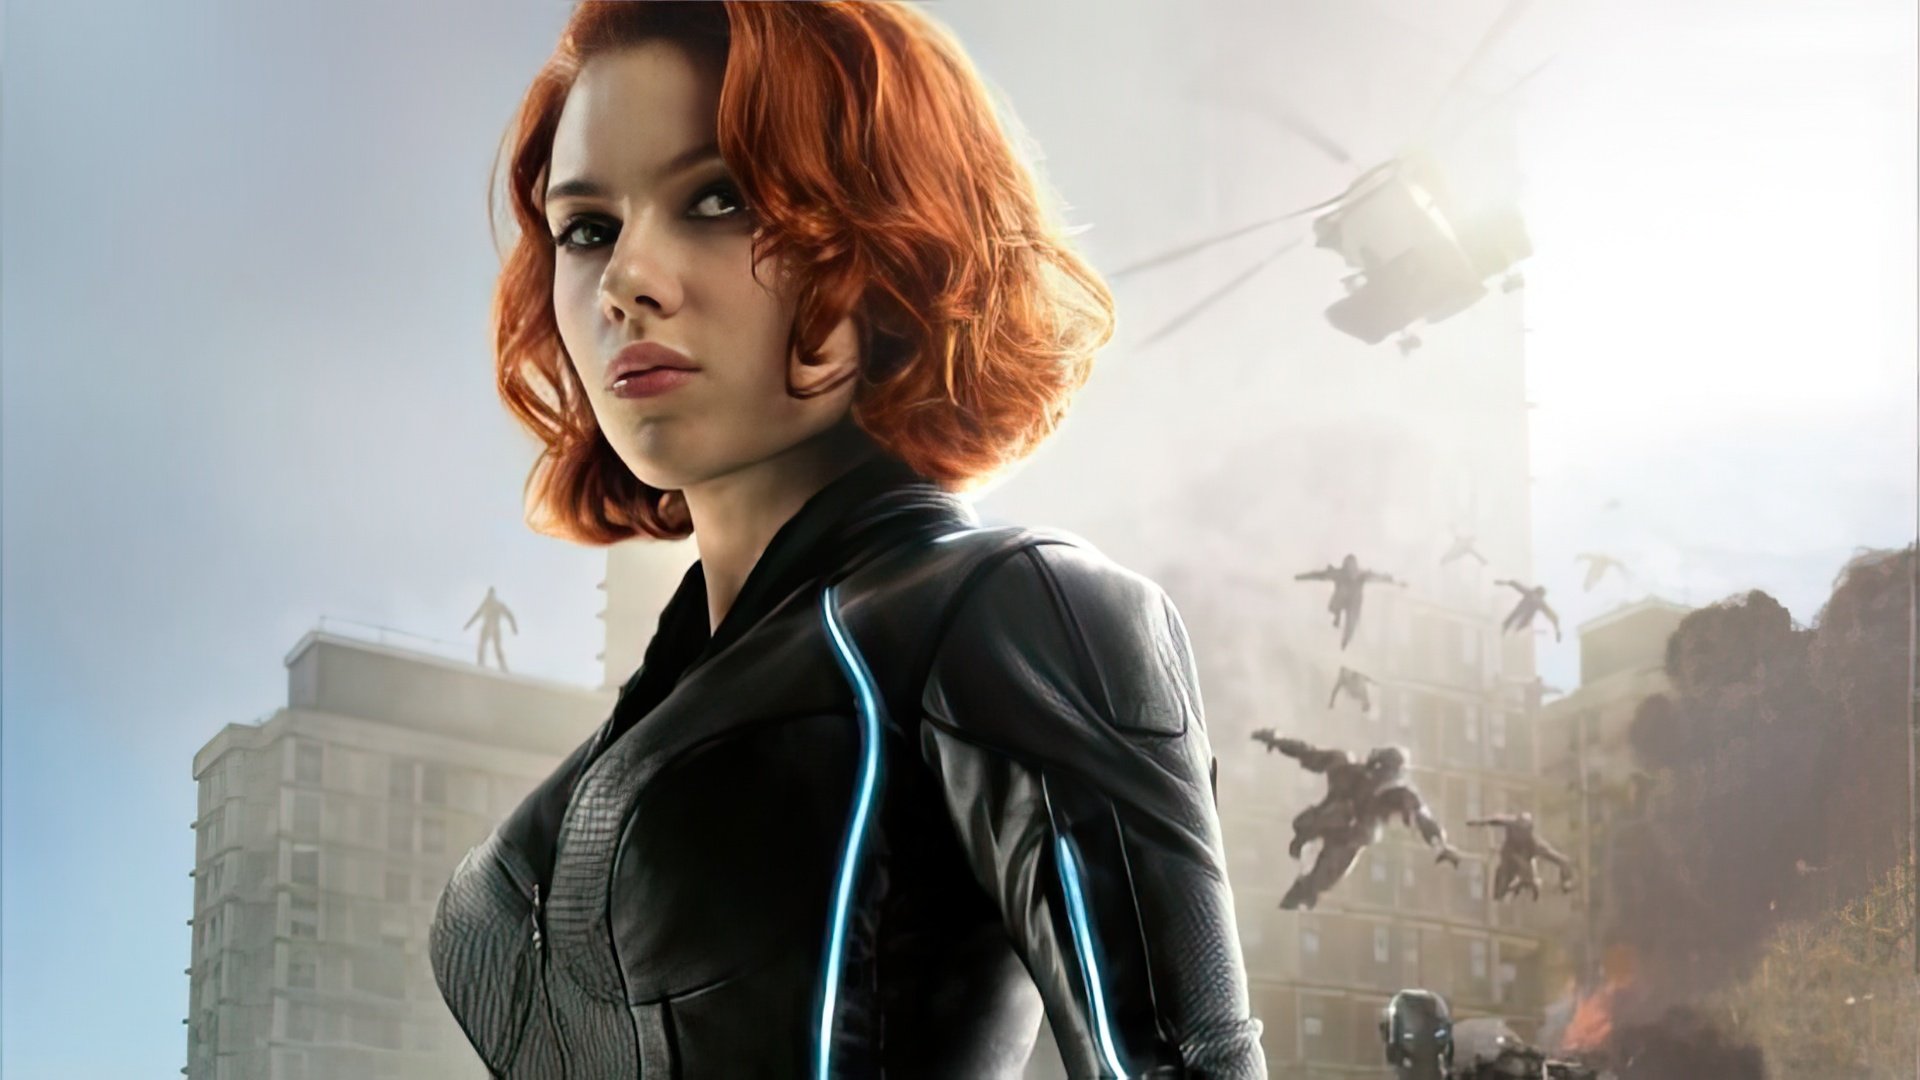 Black Widow, Natasha Romanoff portrayed by Scarlett Johansson